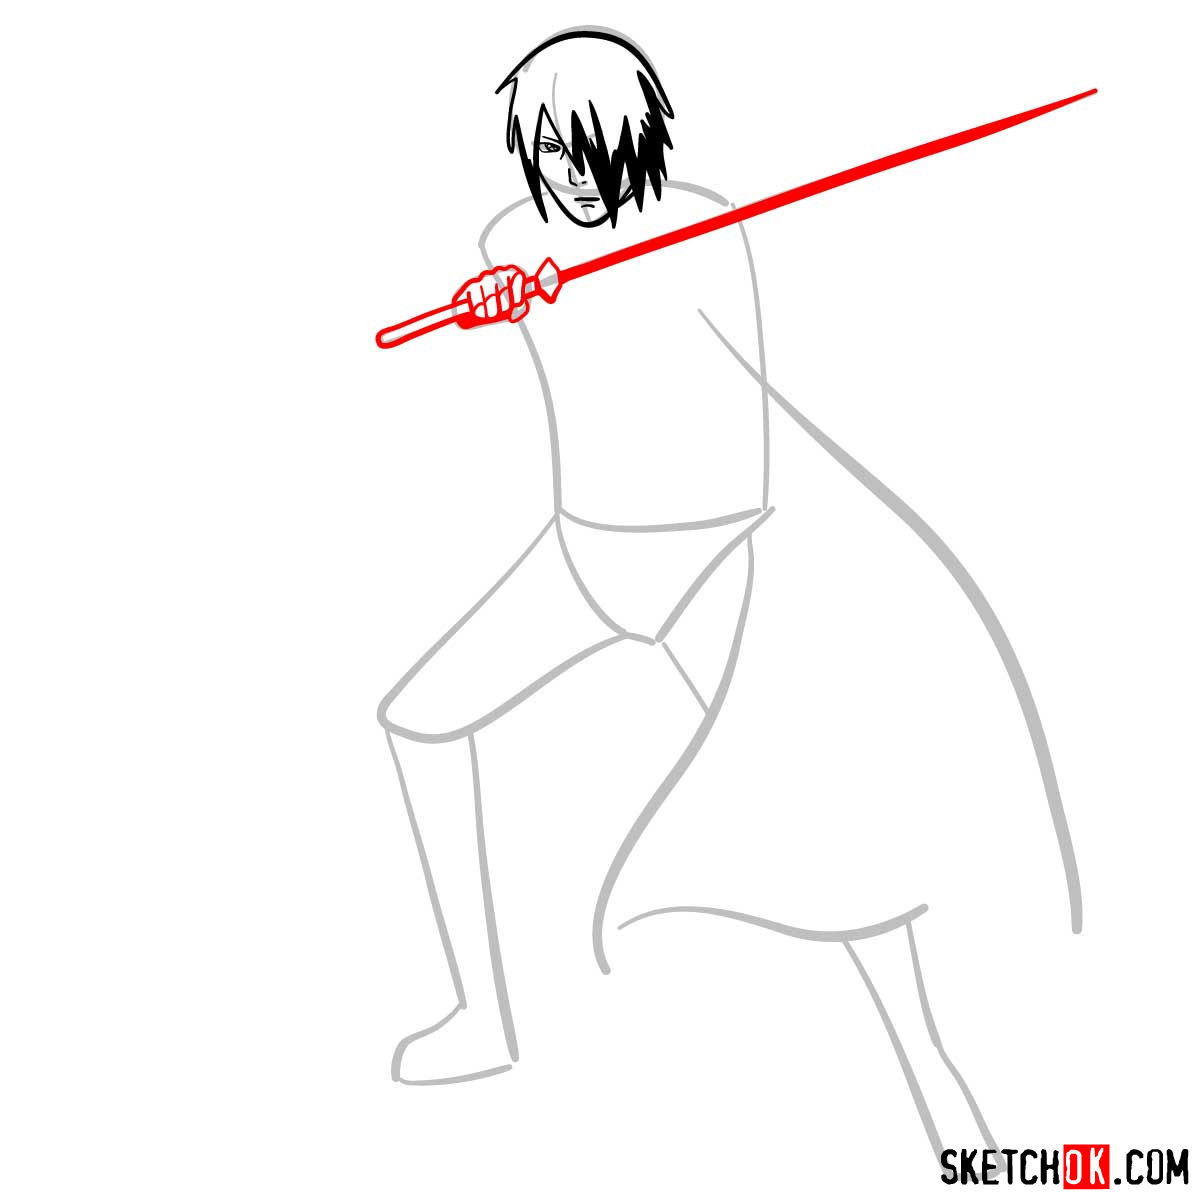 How to draw Sasuke Uchiha from Naruto anime - Sketchok easy drawing guides